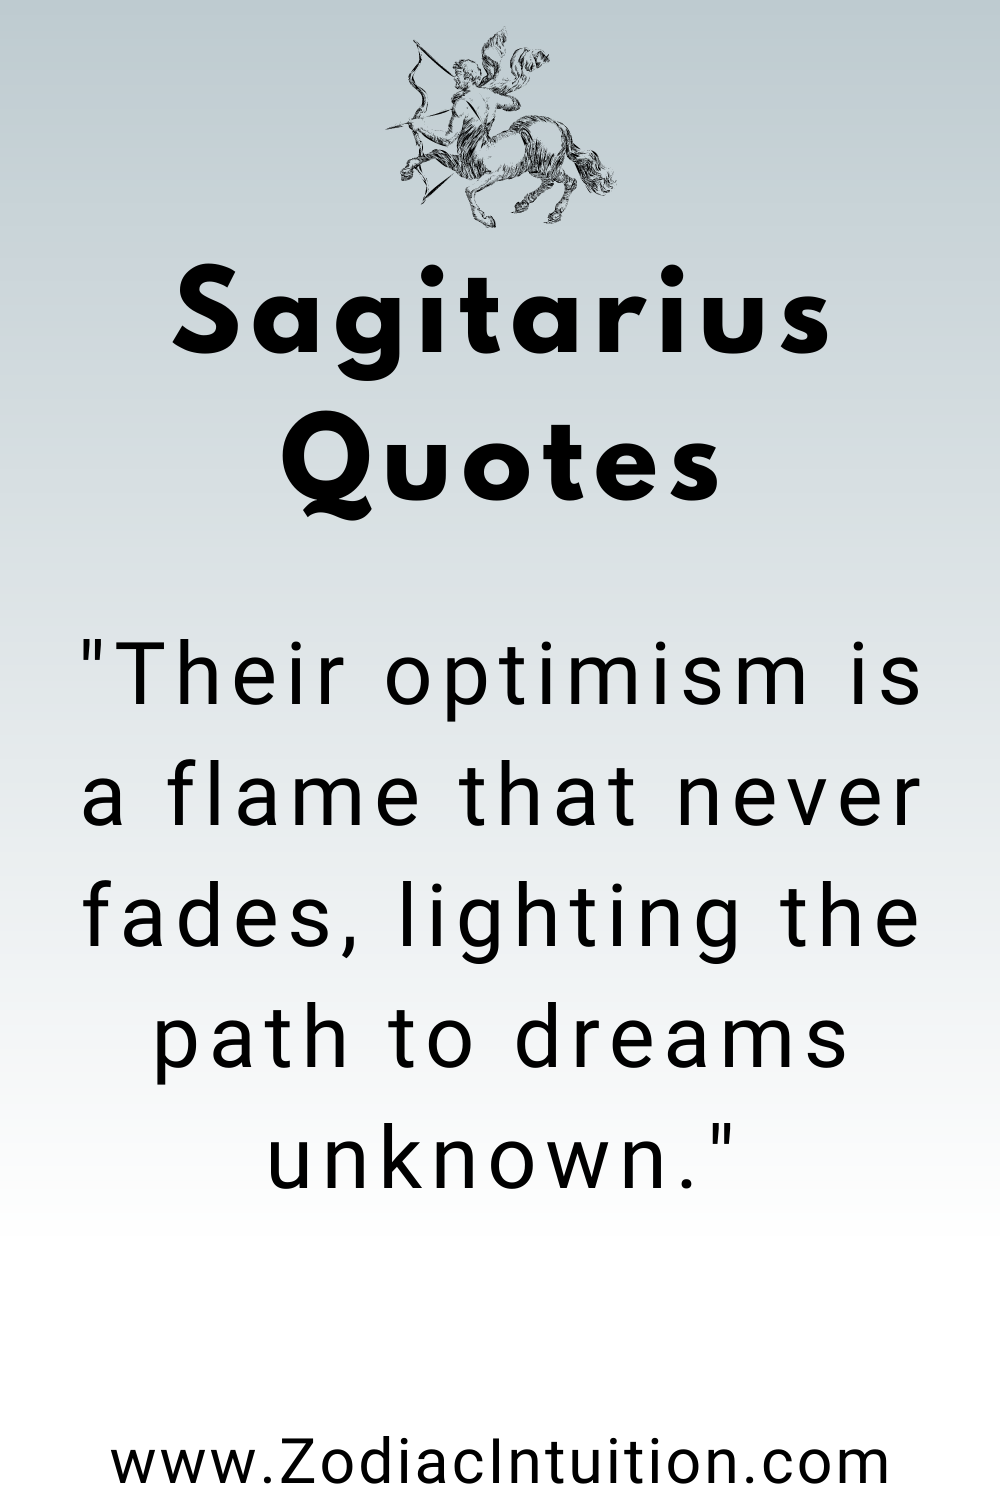 Top 5 Sagittarius Quotes And Inspiration